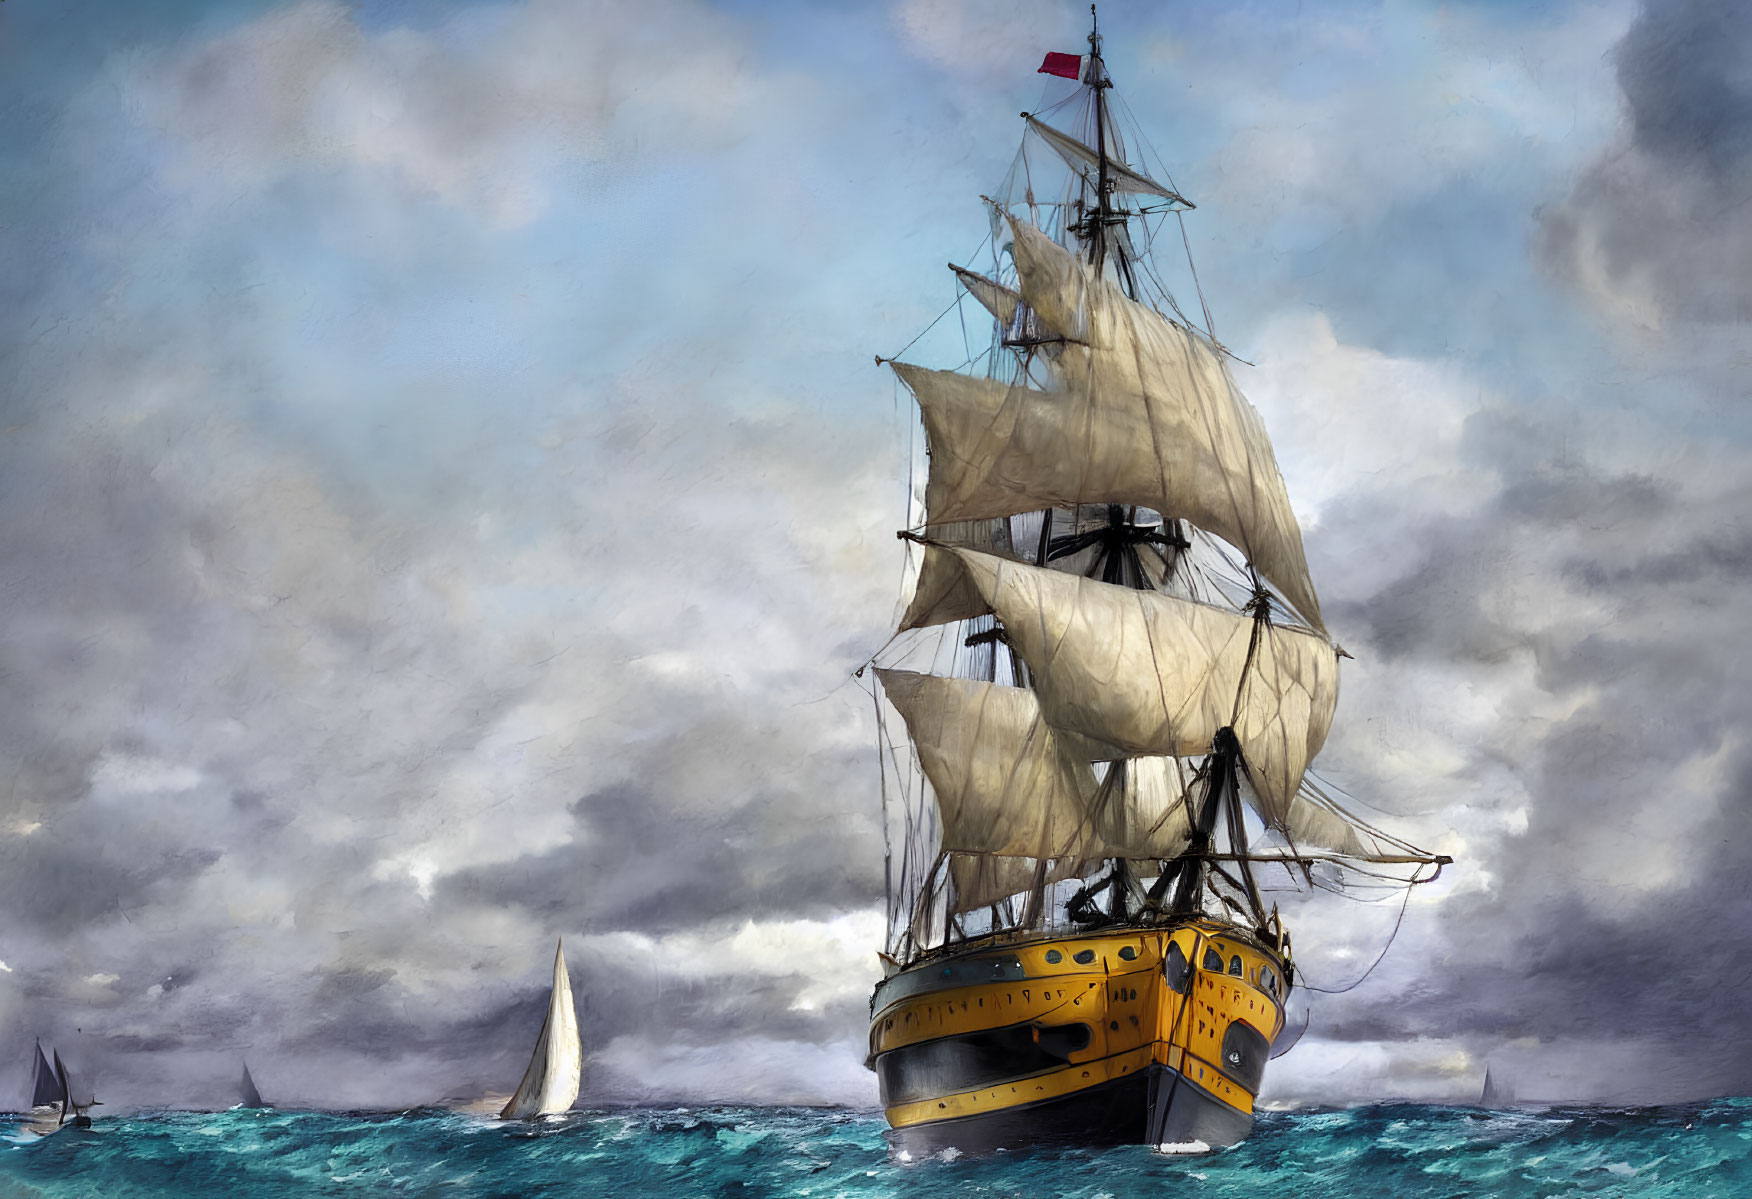 Majestic tall ship with full sails navigating turbulent seas